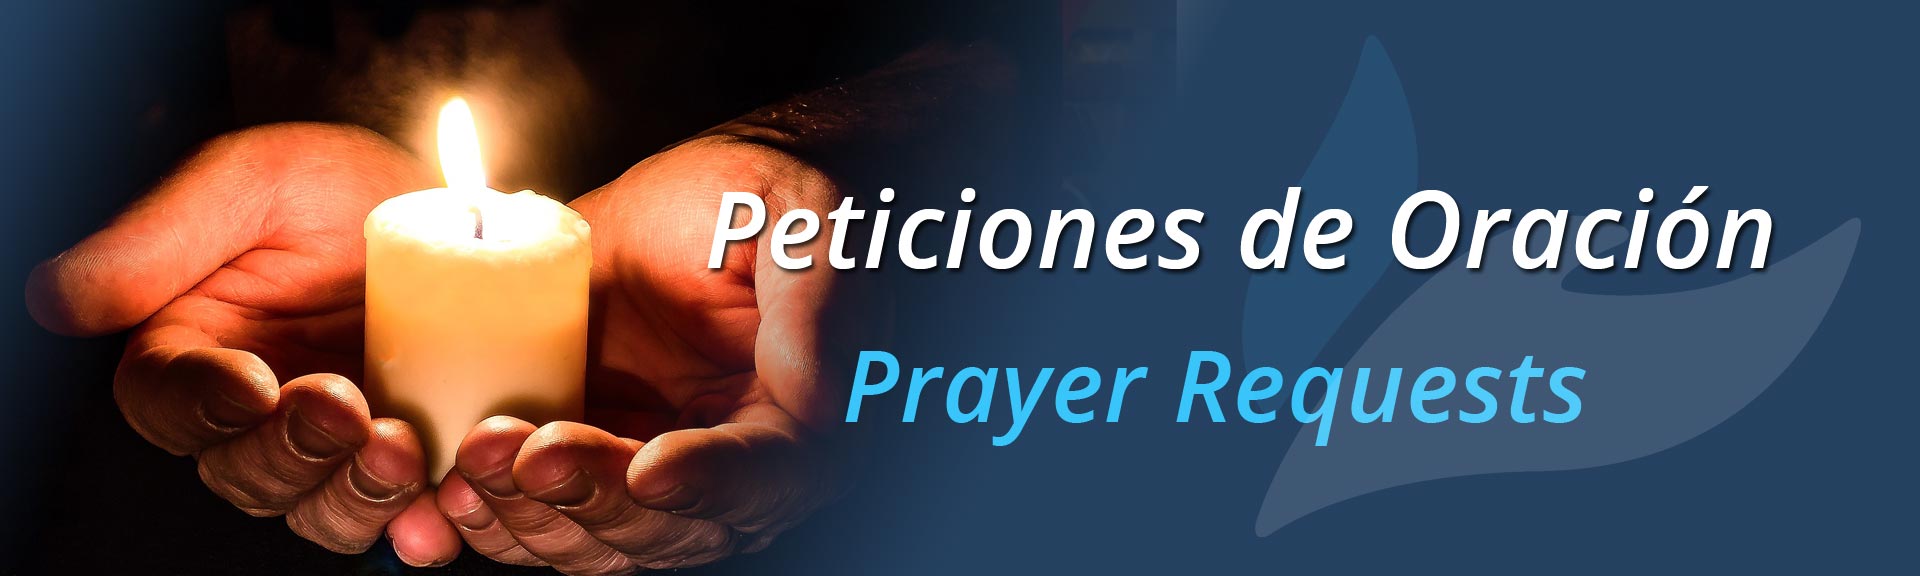 Prayer Requests for Avivamiento Latino Church - Iglesia Hispanica en Durham NC